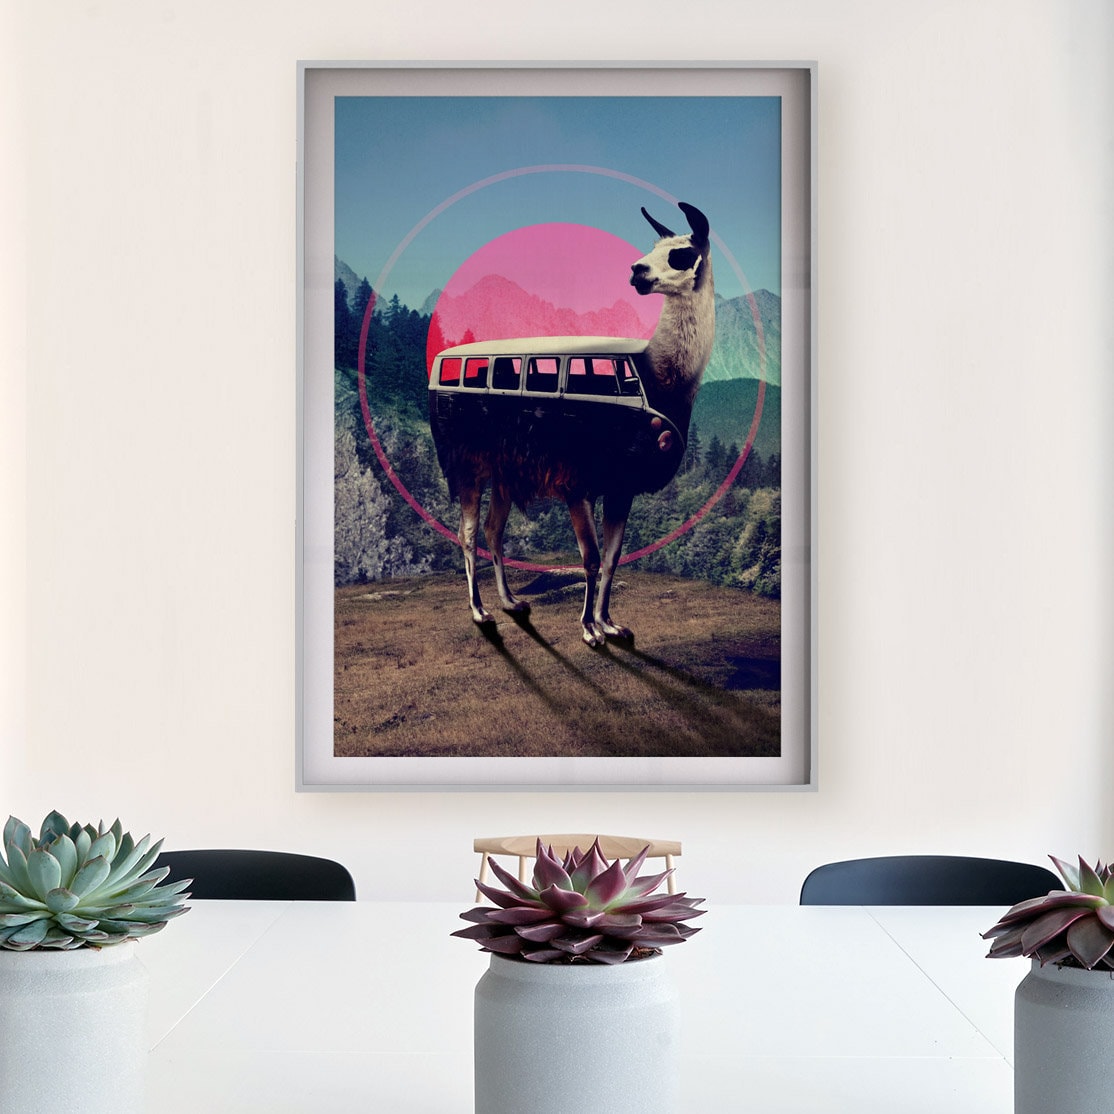 Llama Art Print, Funny Animal Wall Art, Hippie Adventure Poster, Animal Art Home Decor Gift, Llama Bus Travel Art, Illustration By Ali Gulec